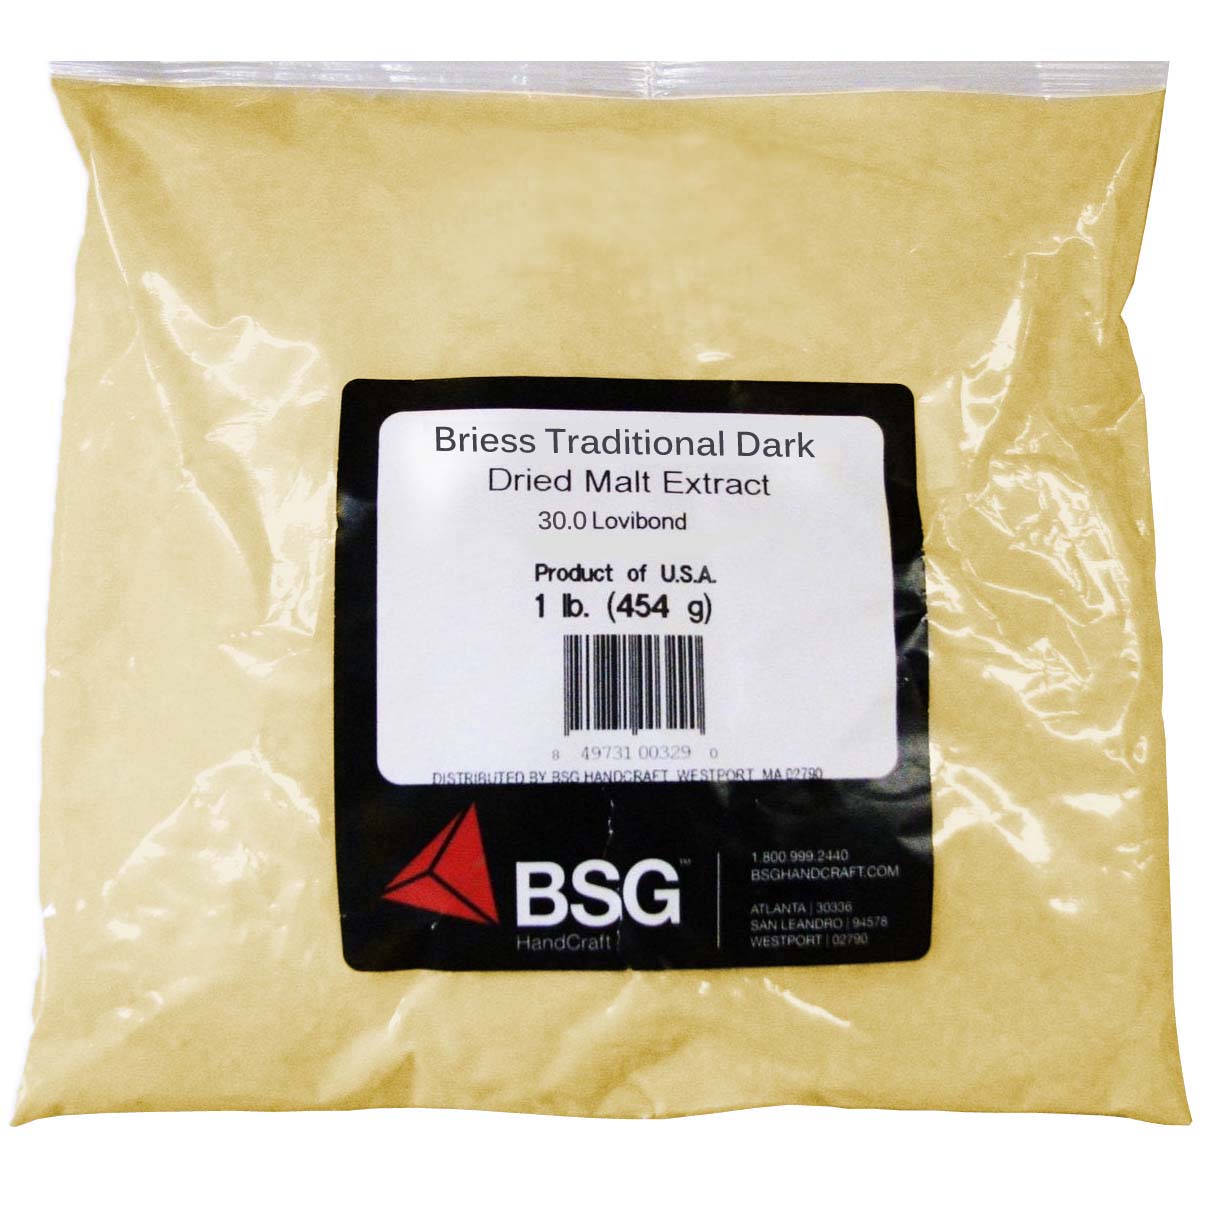 Briess traditional Dark DME - 1lb